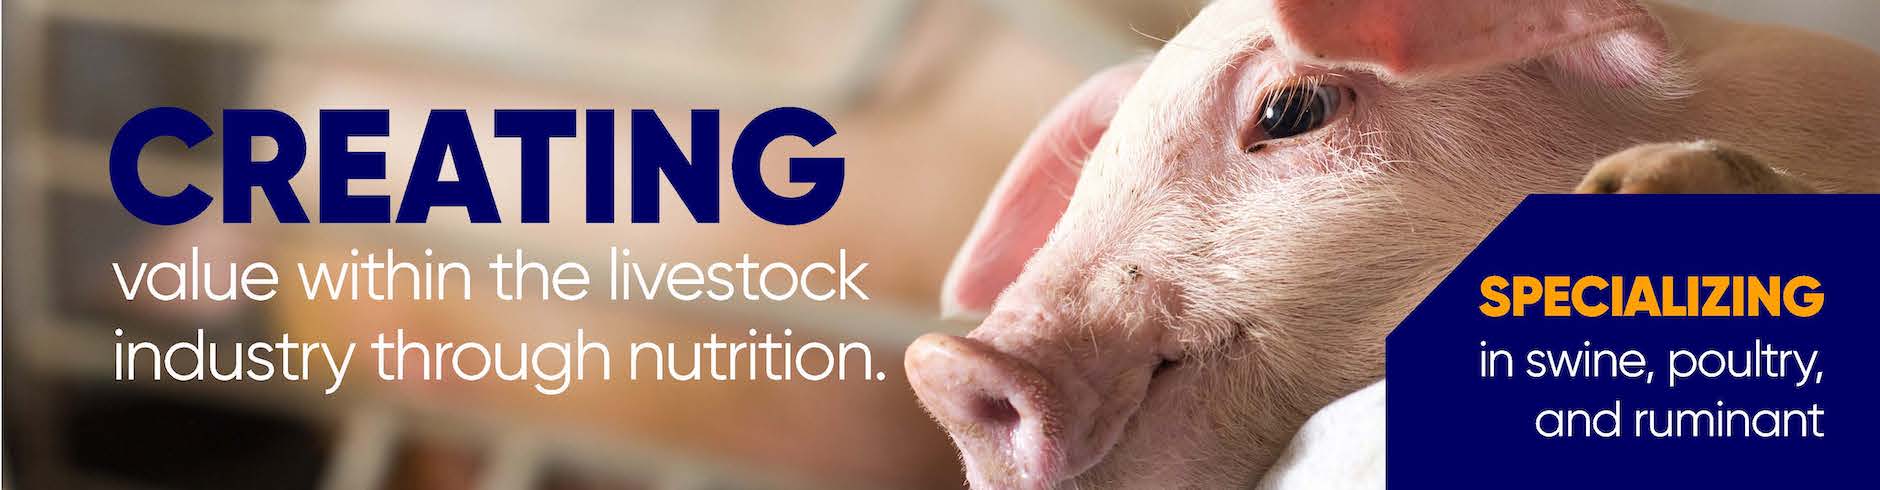 Devenish Nutrition - The Agri-technology Company supplying Animal Feeds